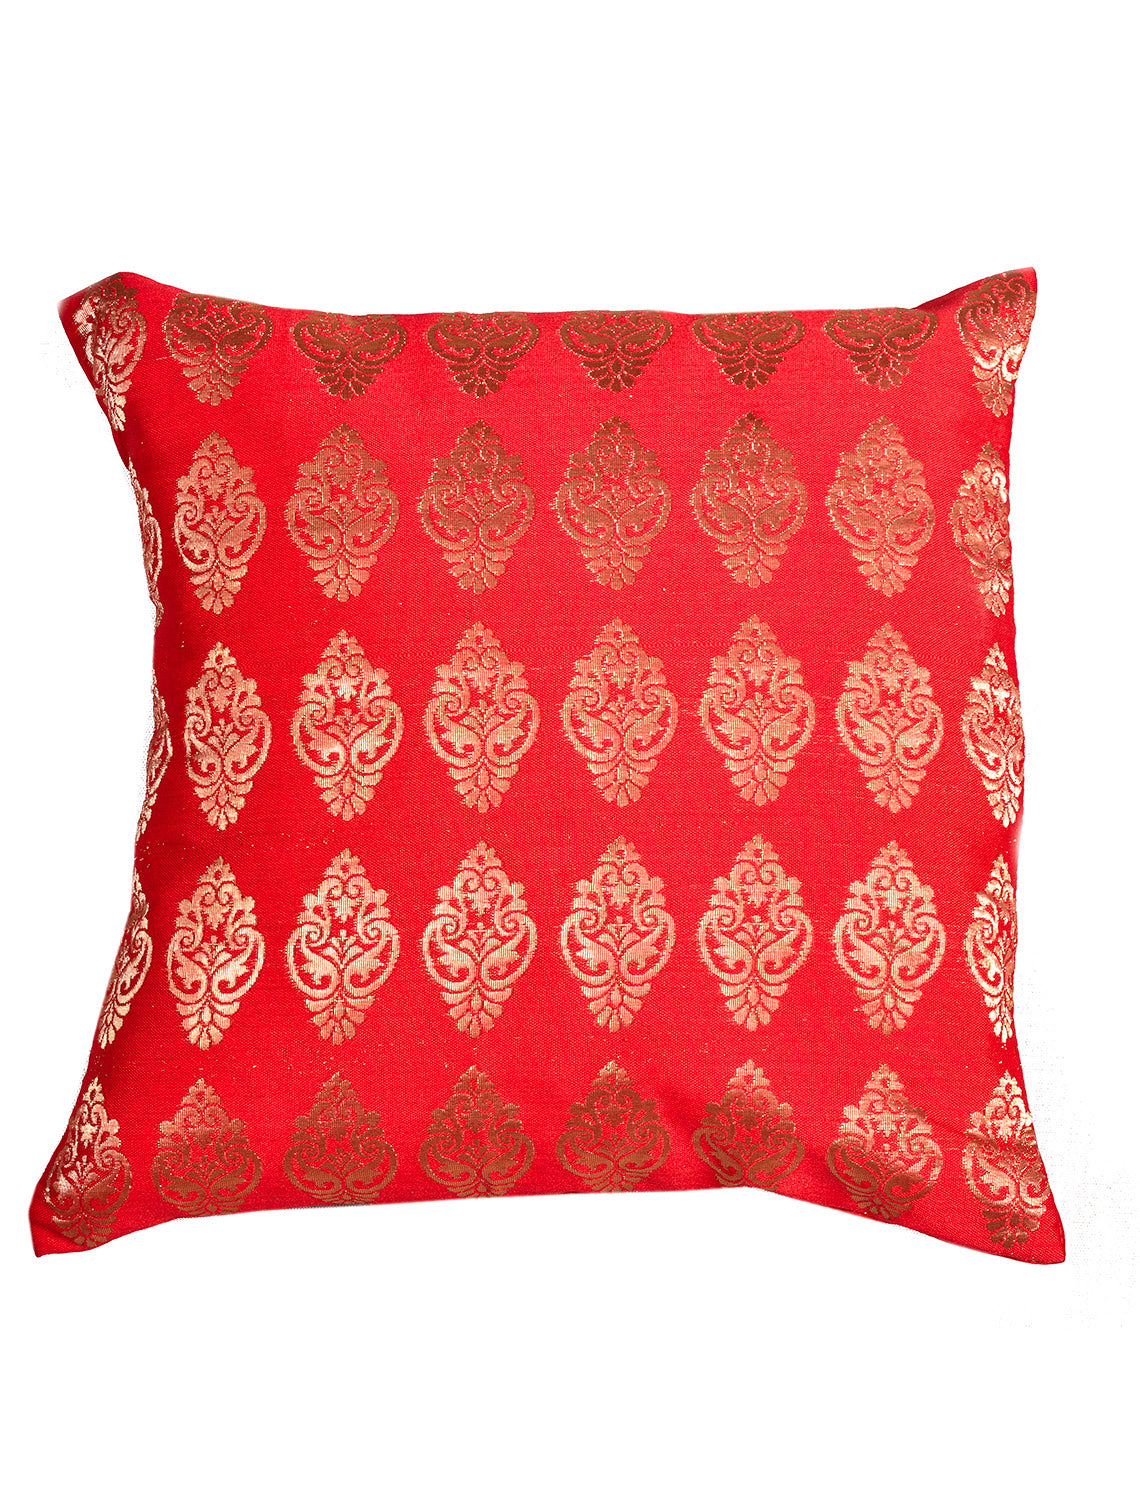 Silkfab Set 0f 5 Decorative Silk Cushion Covers (16x16) Boota Red - SILKFAB